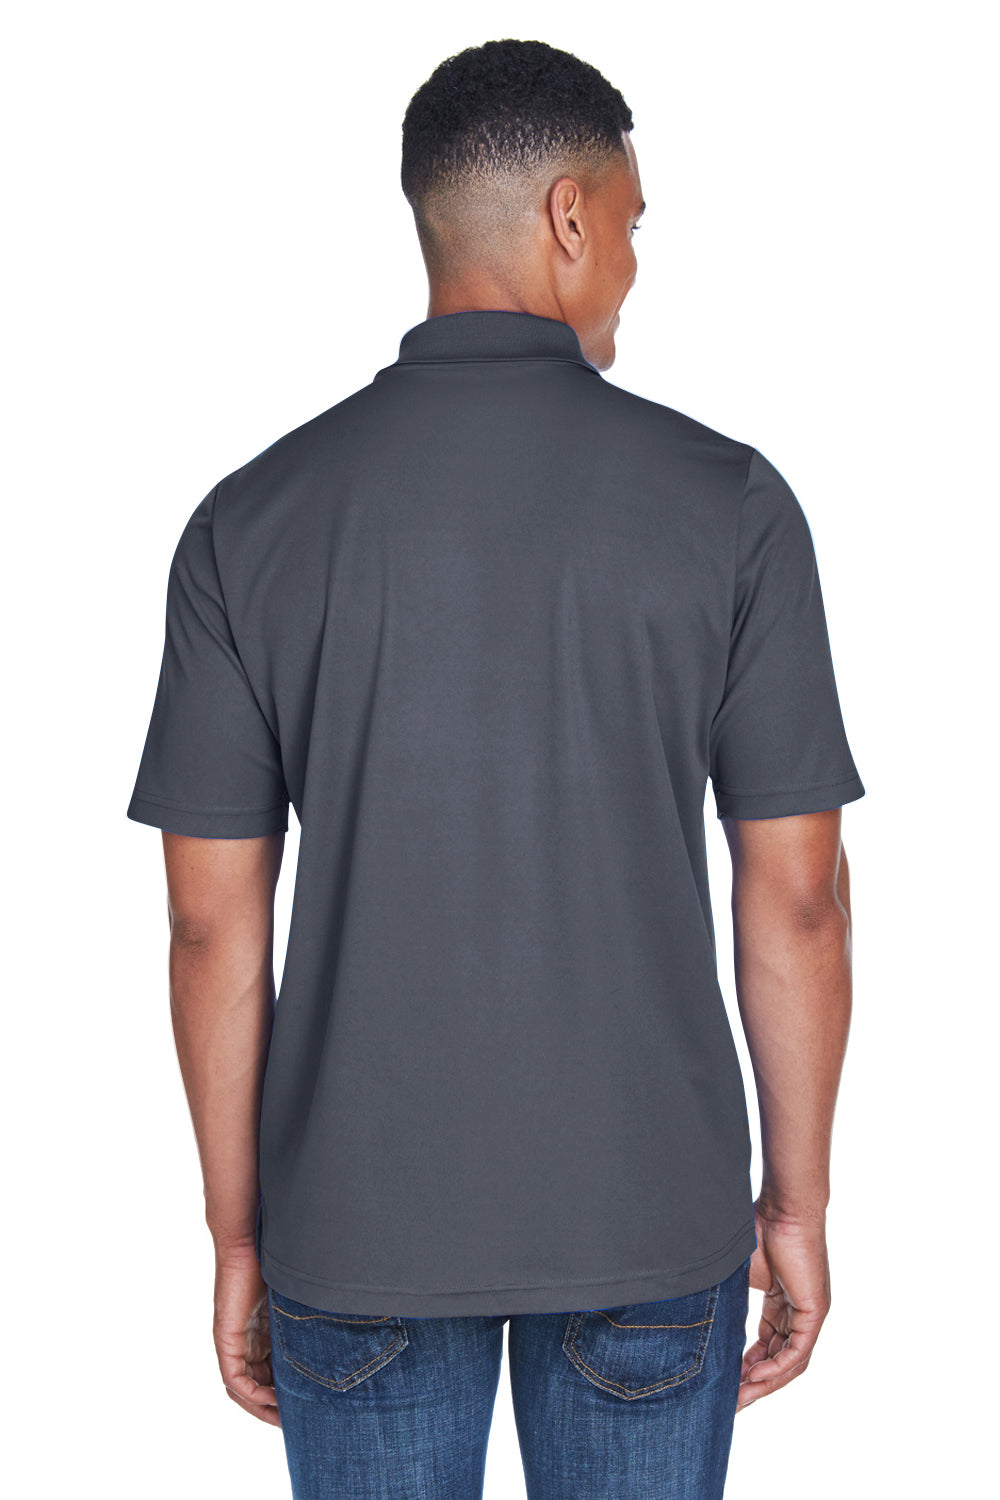 Core 365 88181P Mens Origin Performance Moisture Wicking Short Sleeve Polo Shirt w/ Pocket Carbon Grey Back